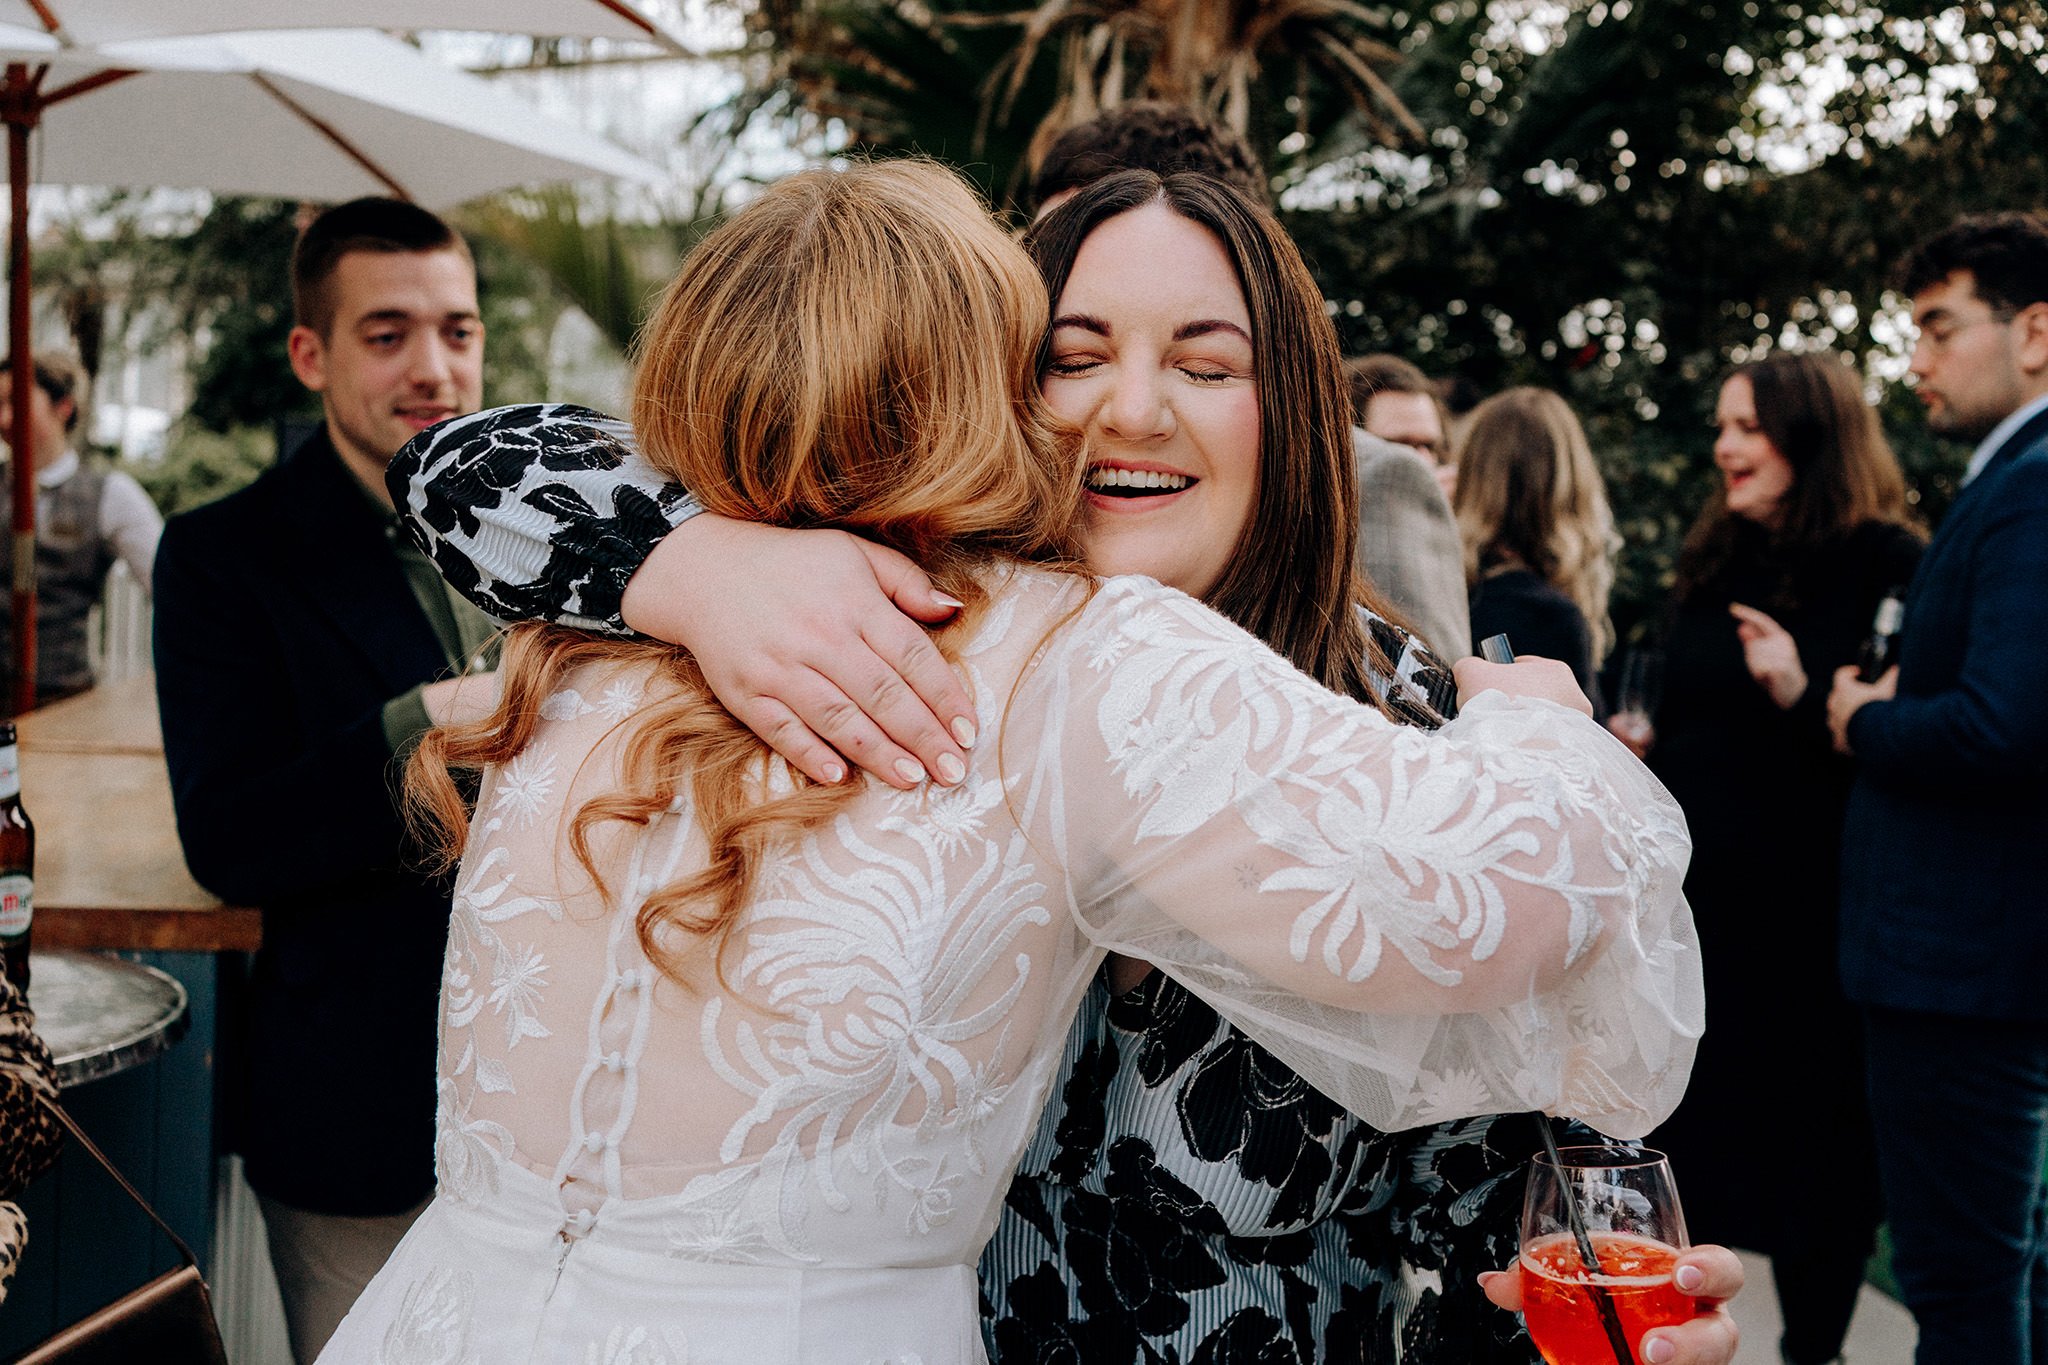 Guest hugging the bride